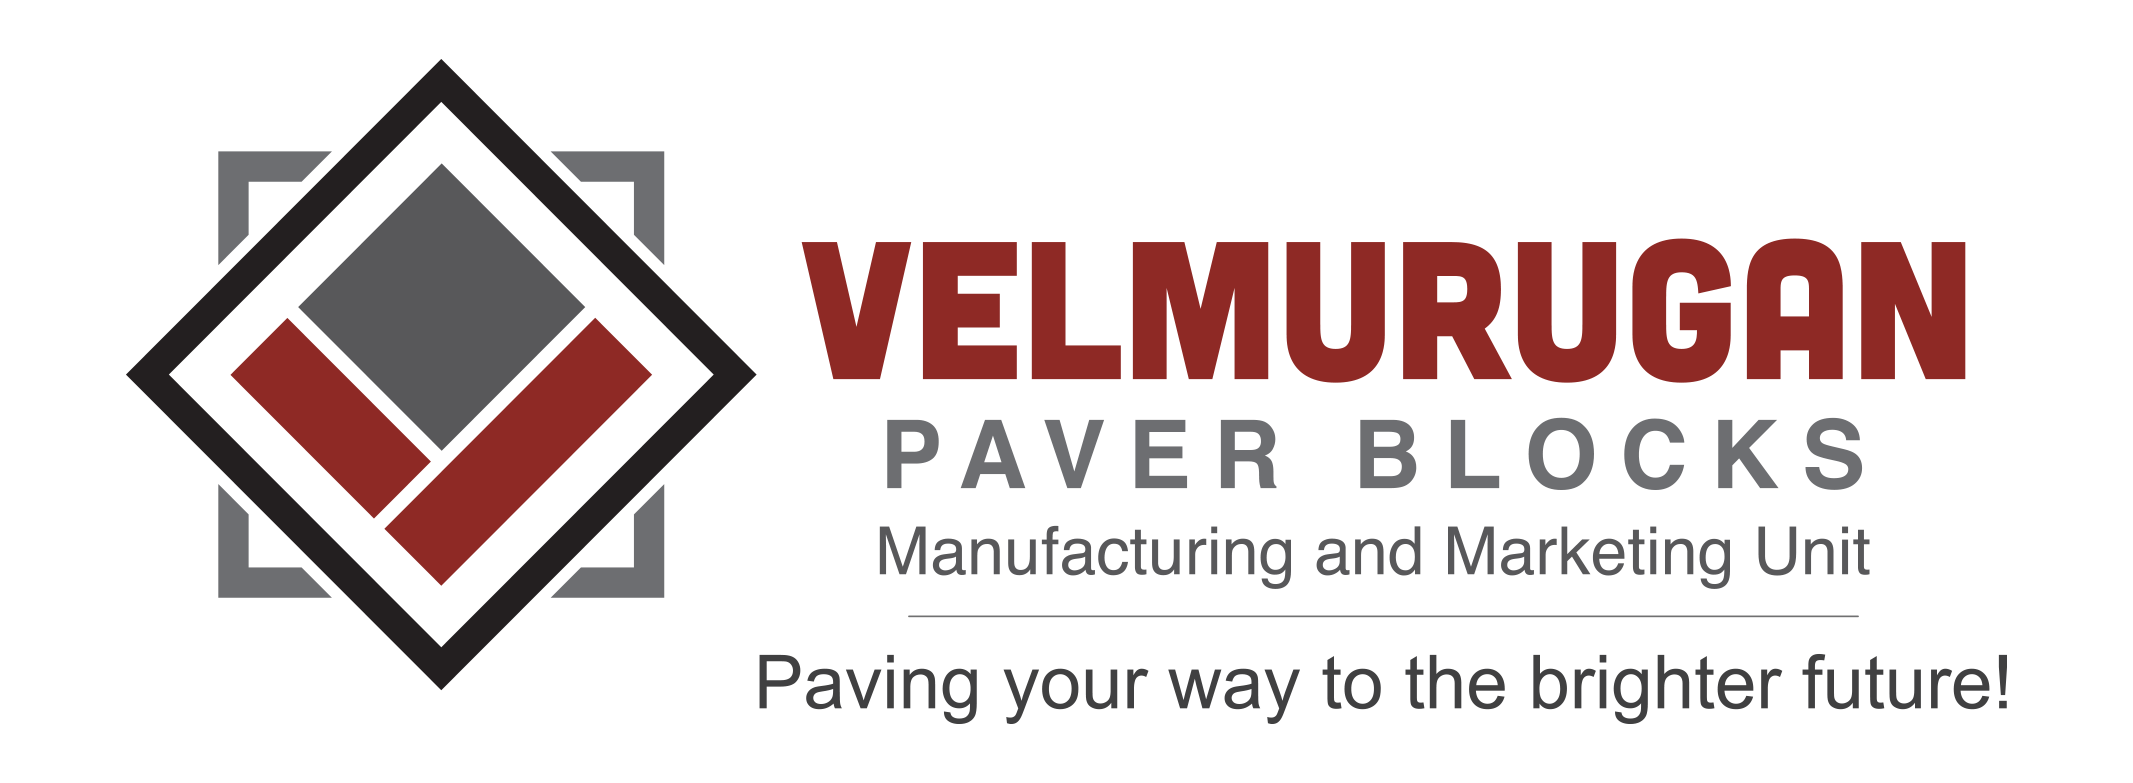 Velmurugan Paver Block Manufacturing & Marketing unit